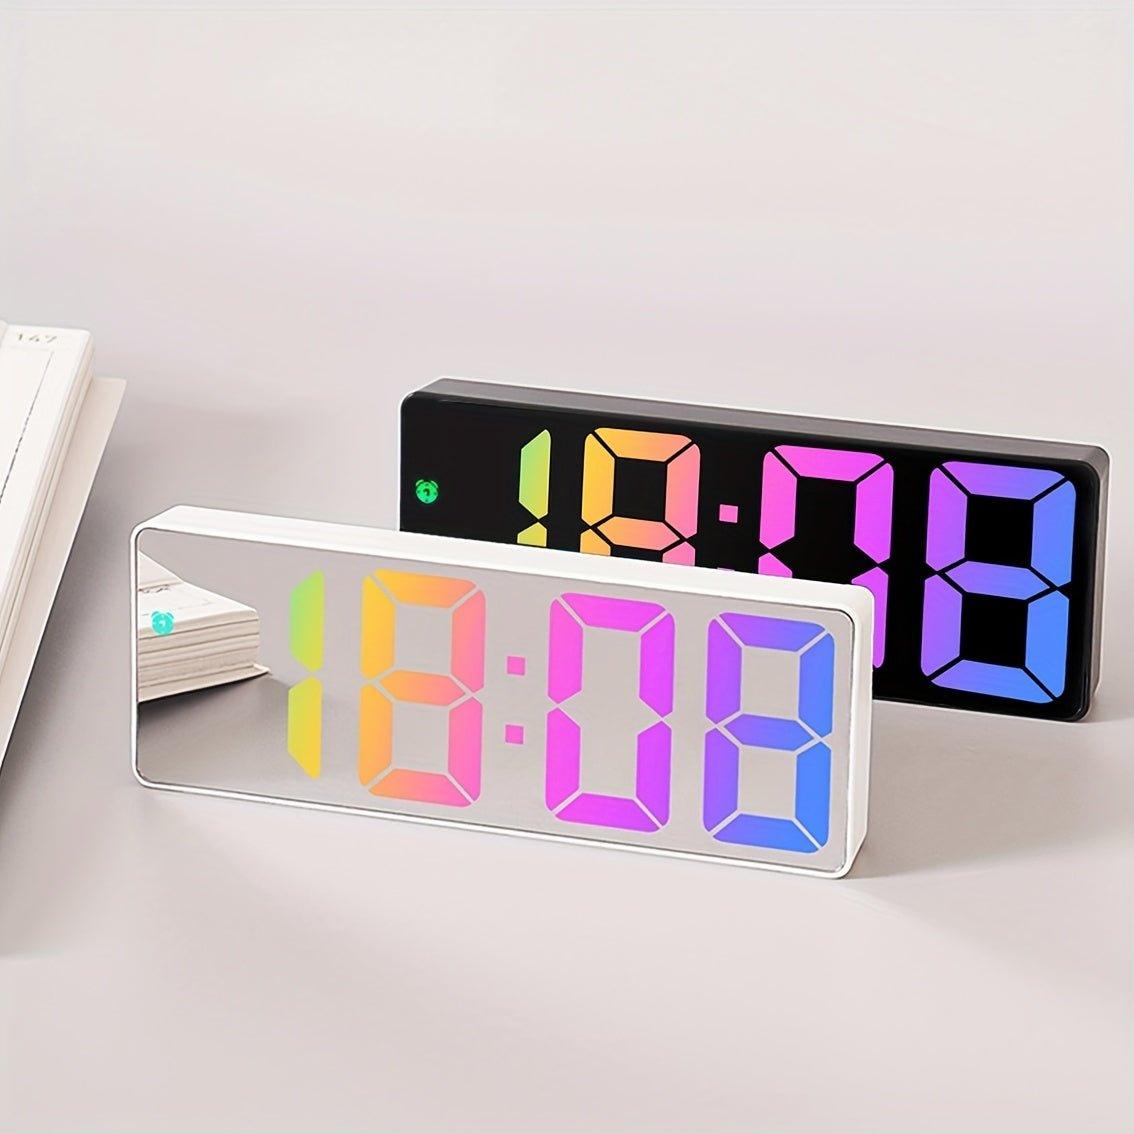 1pc, LED Digital Electronic Clock Bedside Alarm Clock, 3-level Adjustable Brightness With Temperature Display Mirror Alarm Clock, Clock For Bedroom, Room Decor, Home Decor - J & B's Accessories